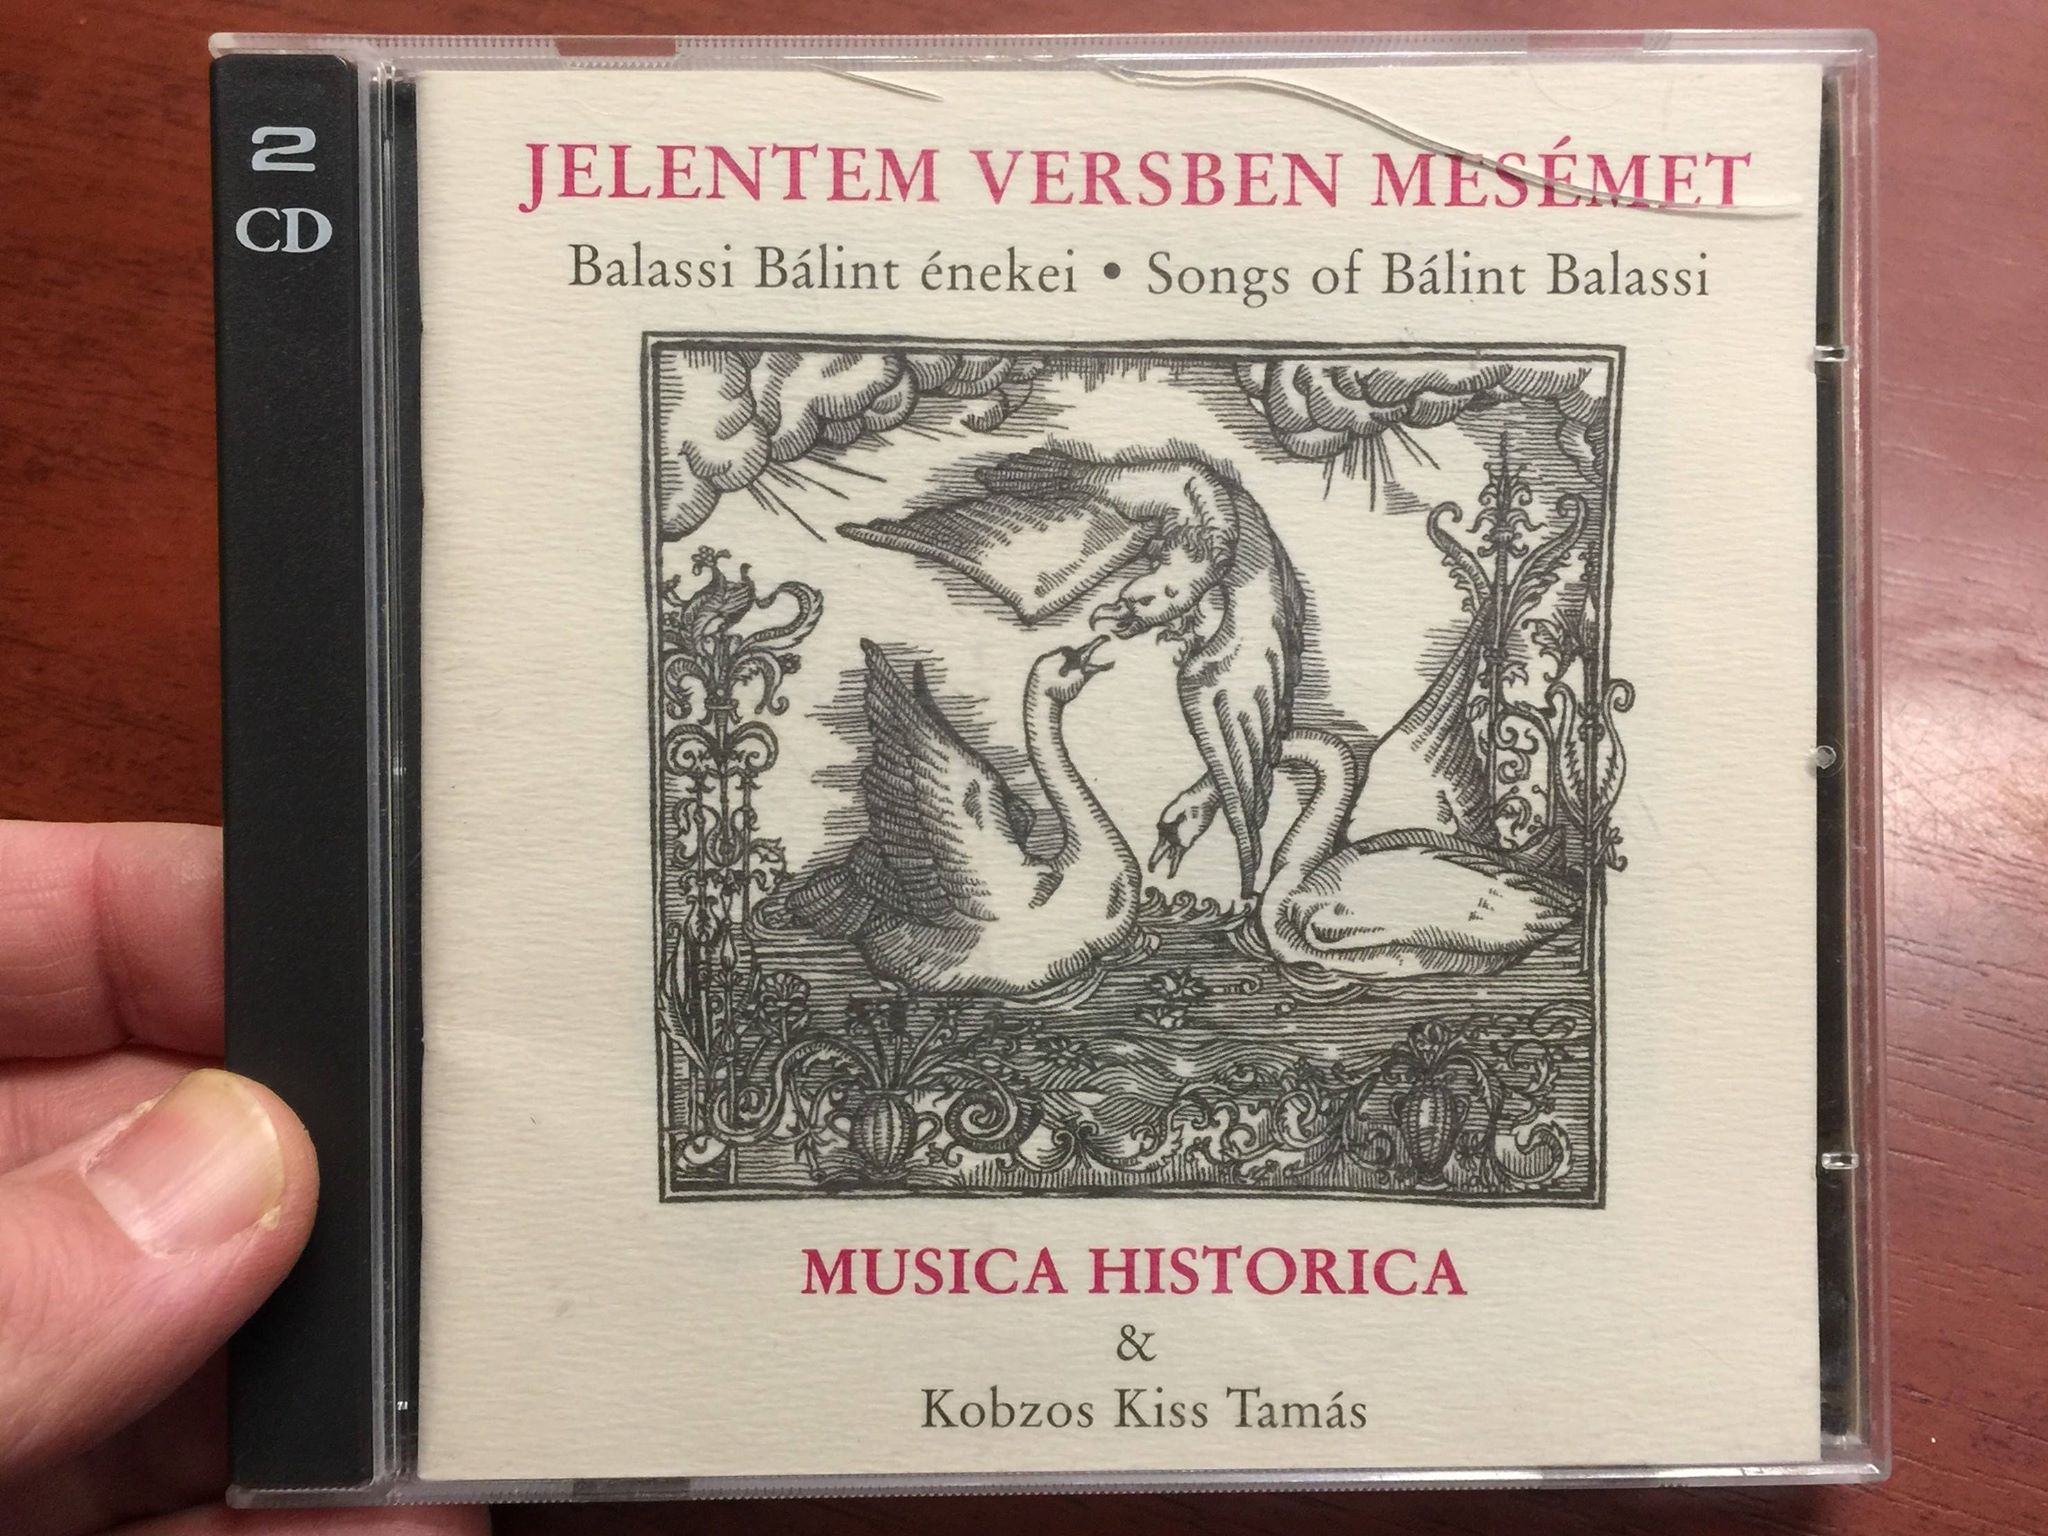 jelentem-versben-mes-met-musica-historica-kobzos-kiss-tam-s-balassi-b-lint-nekei-songs-of-b-lint-balassi-hungarian-cd-2015-2-cd-set-1-.jpg